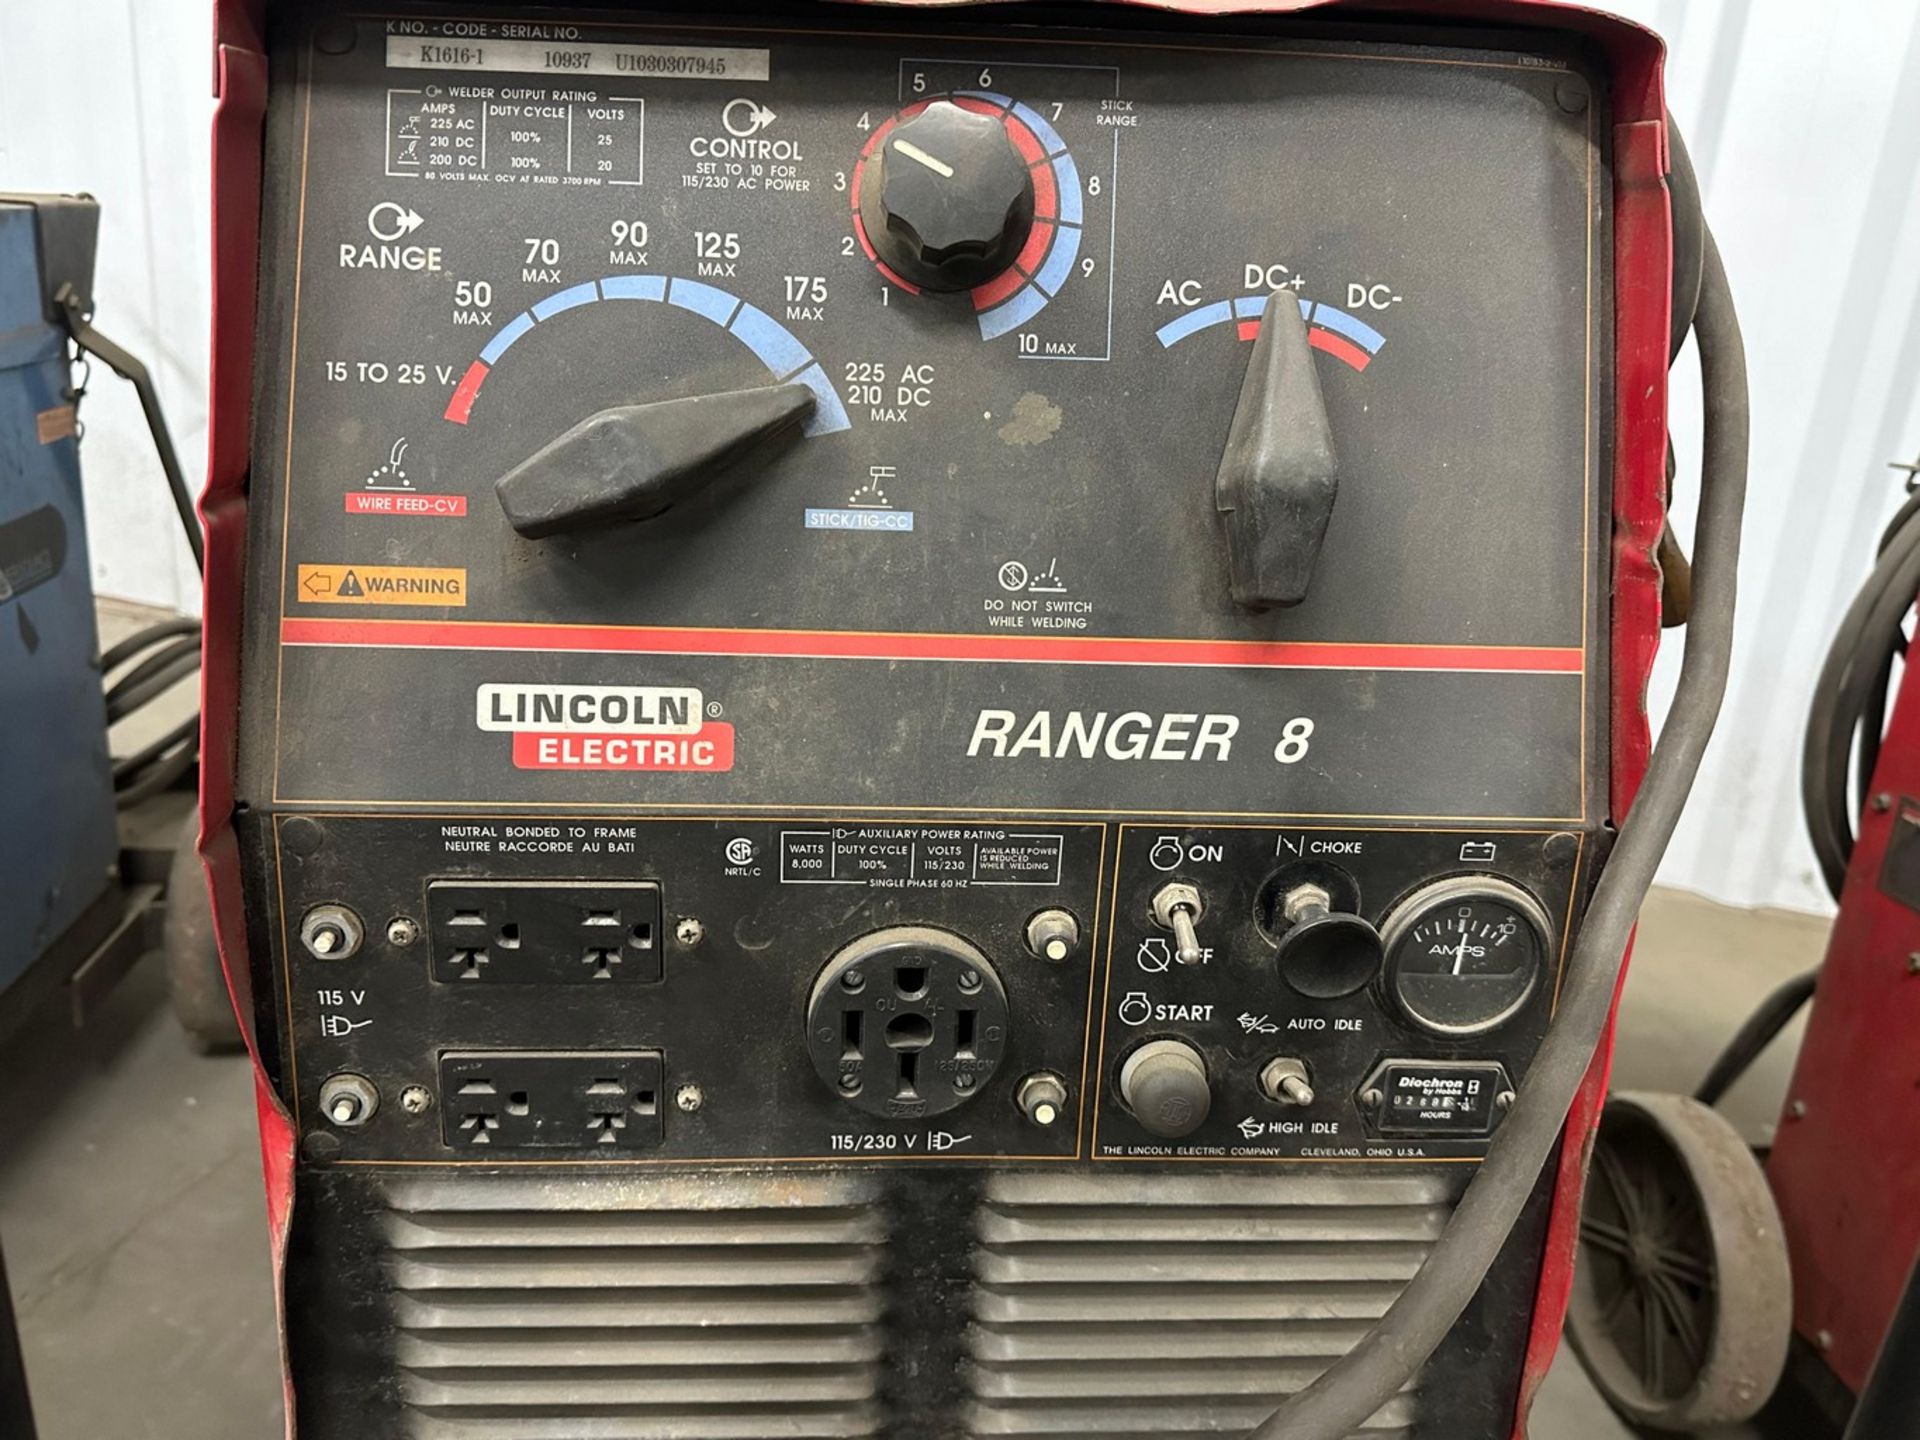 Lincoln Ranger 8 LP Generator Welder - Image 2 of 5